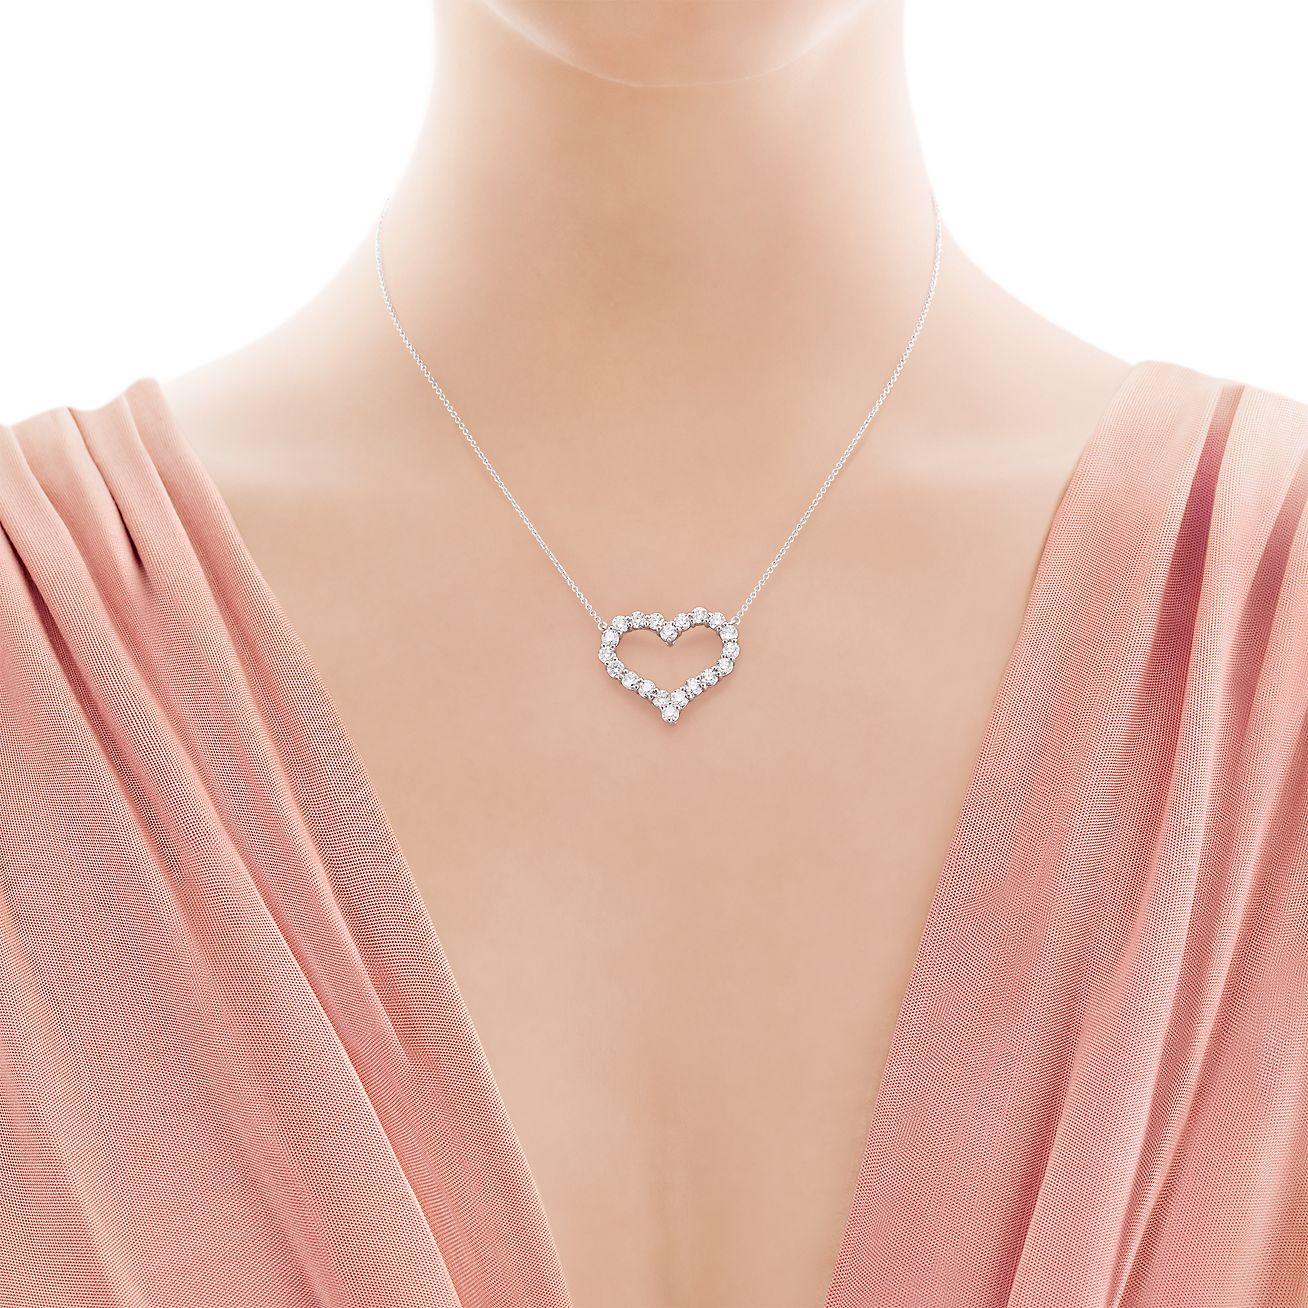 tiffany large heart necklace